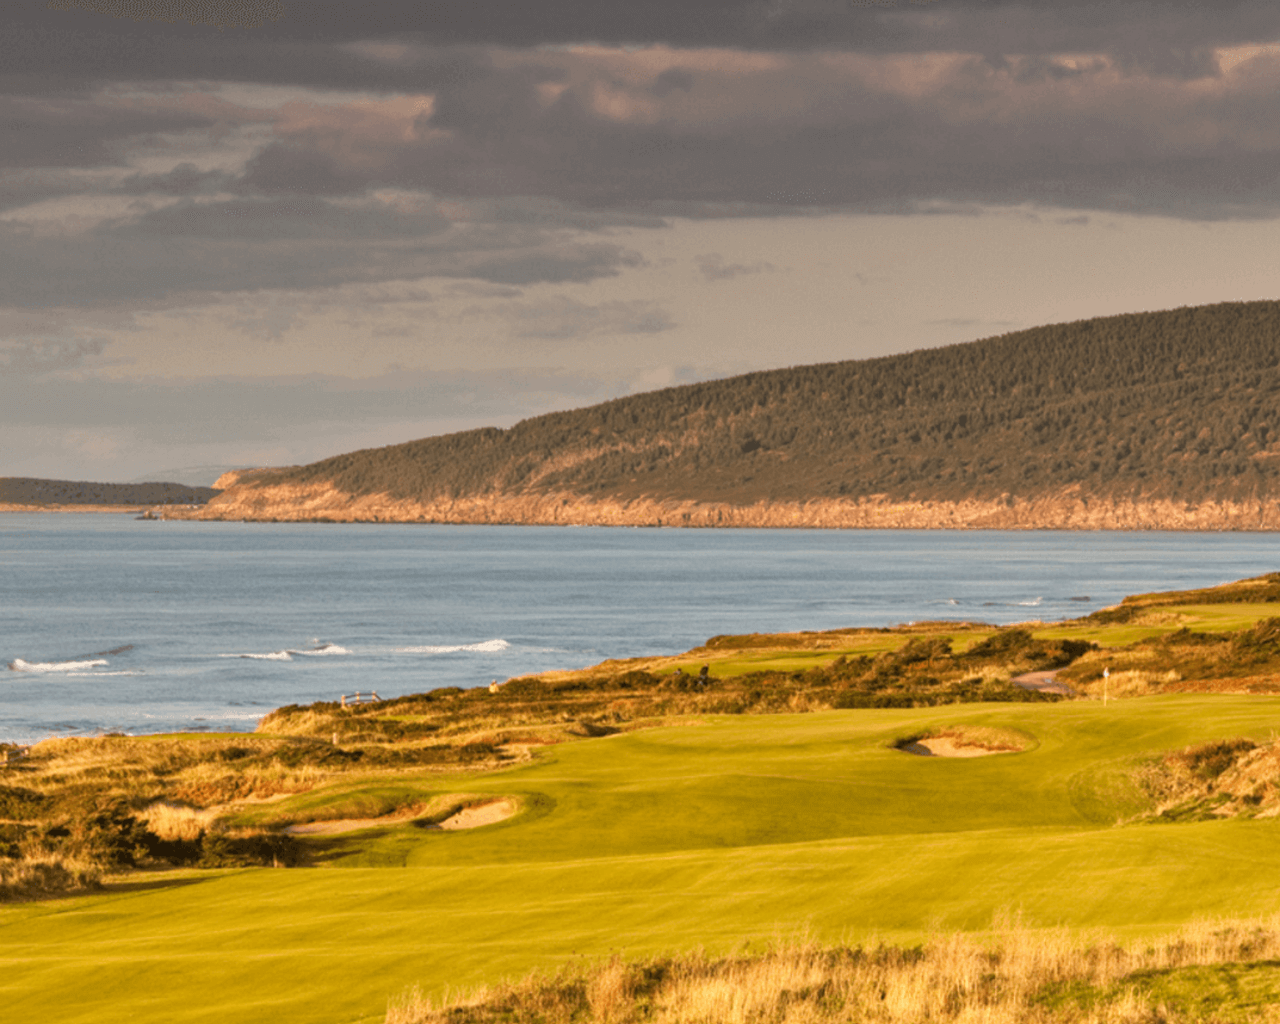 Link Golf Course, golf, plage, soleil, ile Maurice